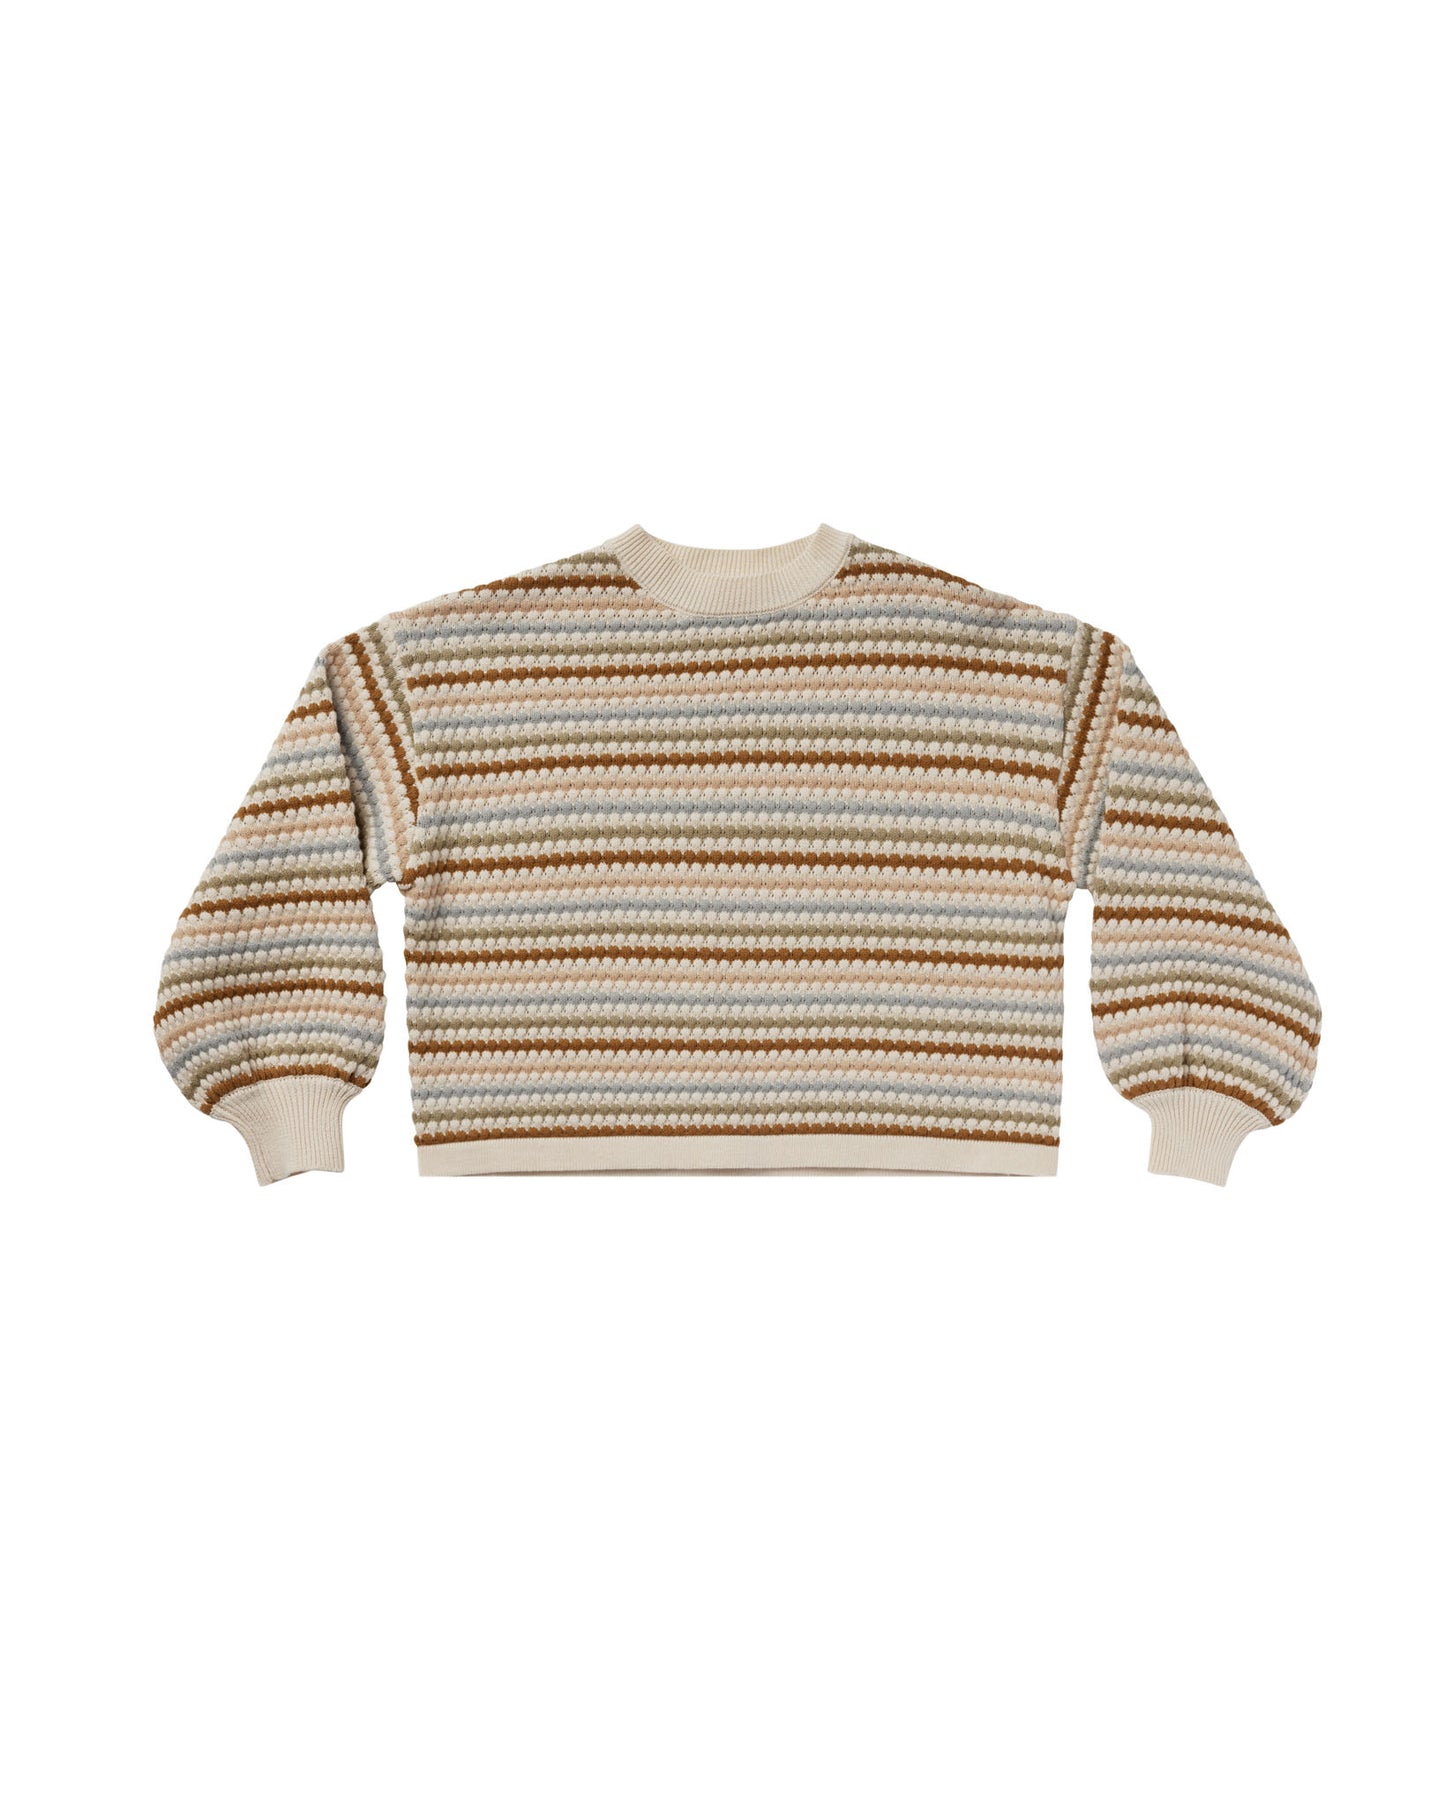 Rylee + Cru - Boxy Crop Sweater - Honeycomb Stripe